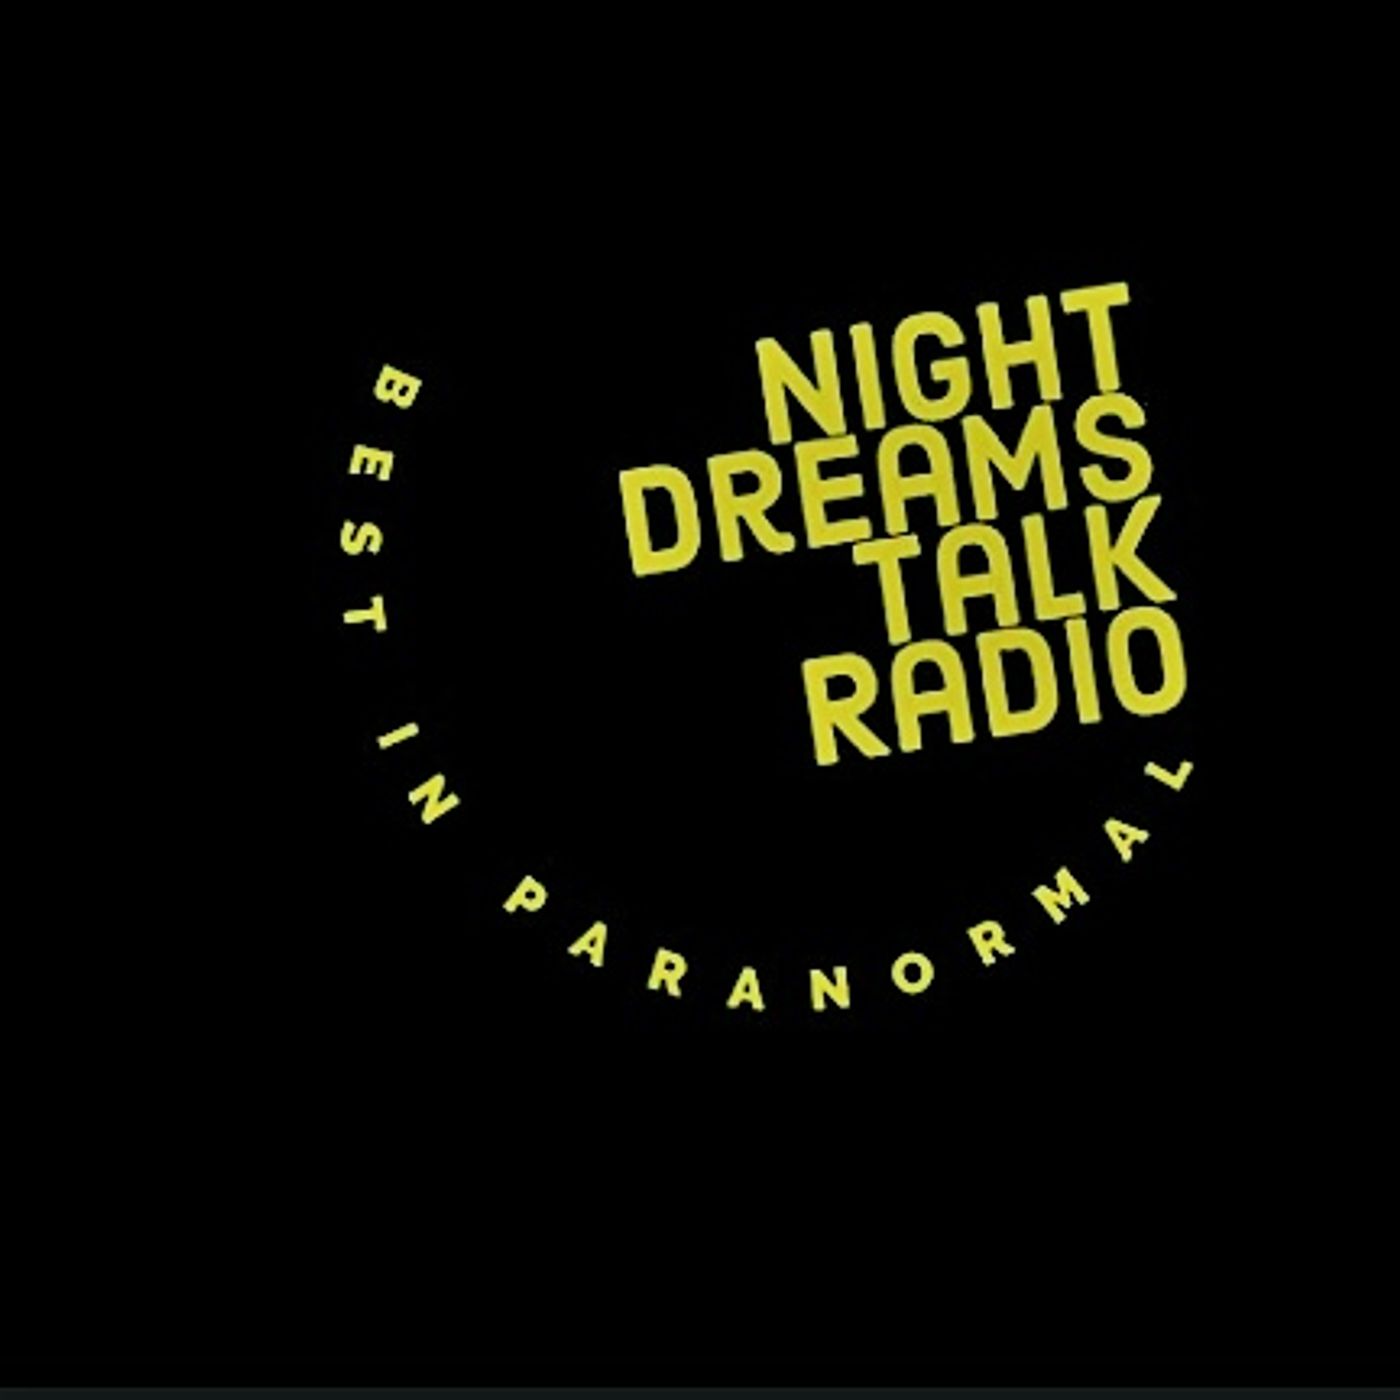 NIGHT DREAMS TALK RADIO  THE STRANGE NEWS!